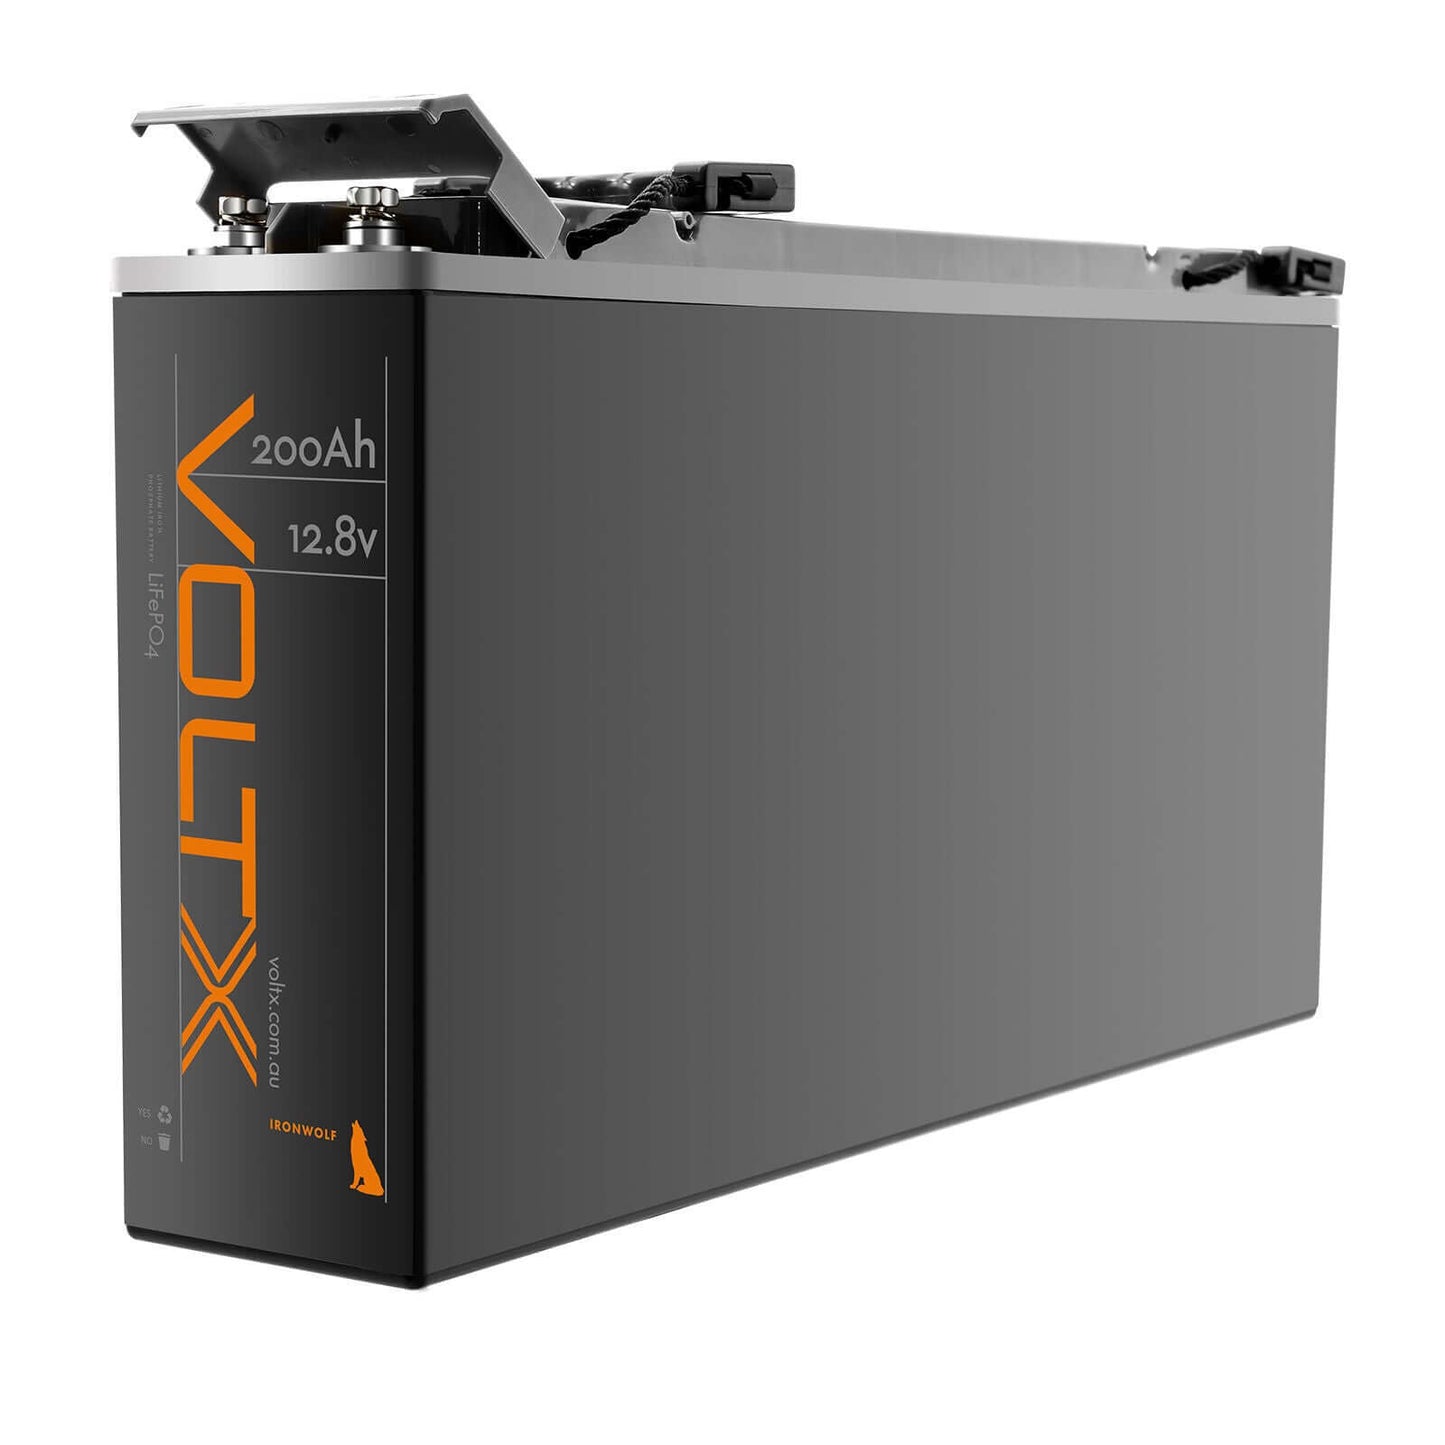 VoltX 200Ah Lithium Battery + 360W Solar Panel & 40A MPPT Controller